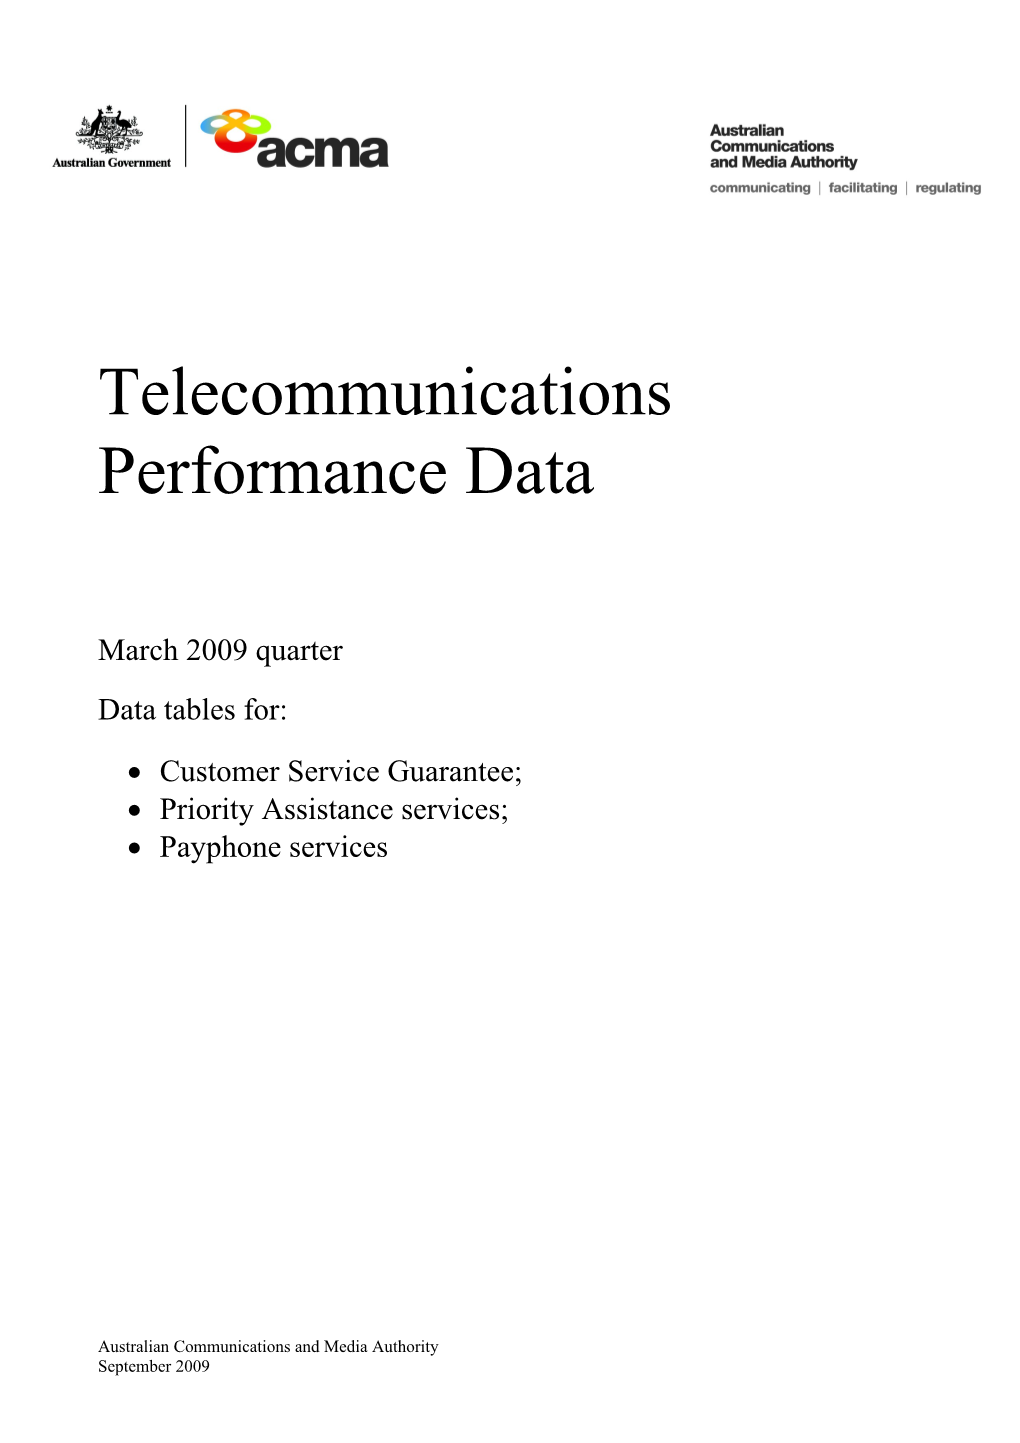 Telecommunications Performance Data - March 2009 Quarter